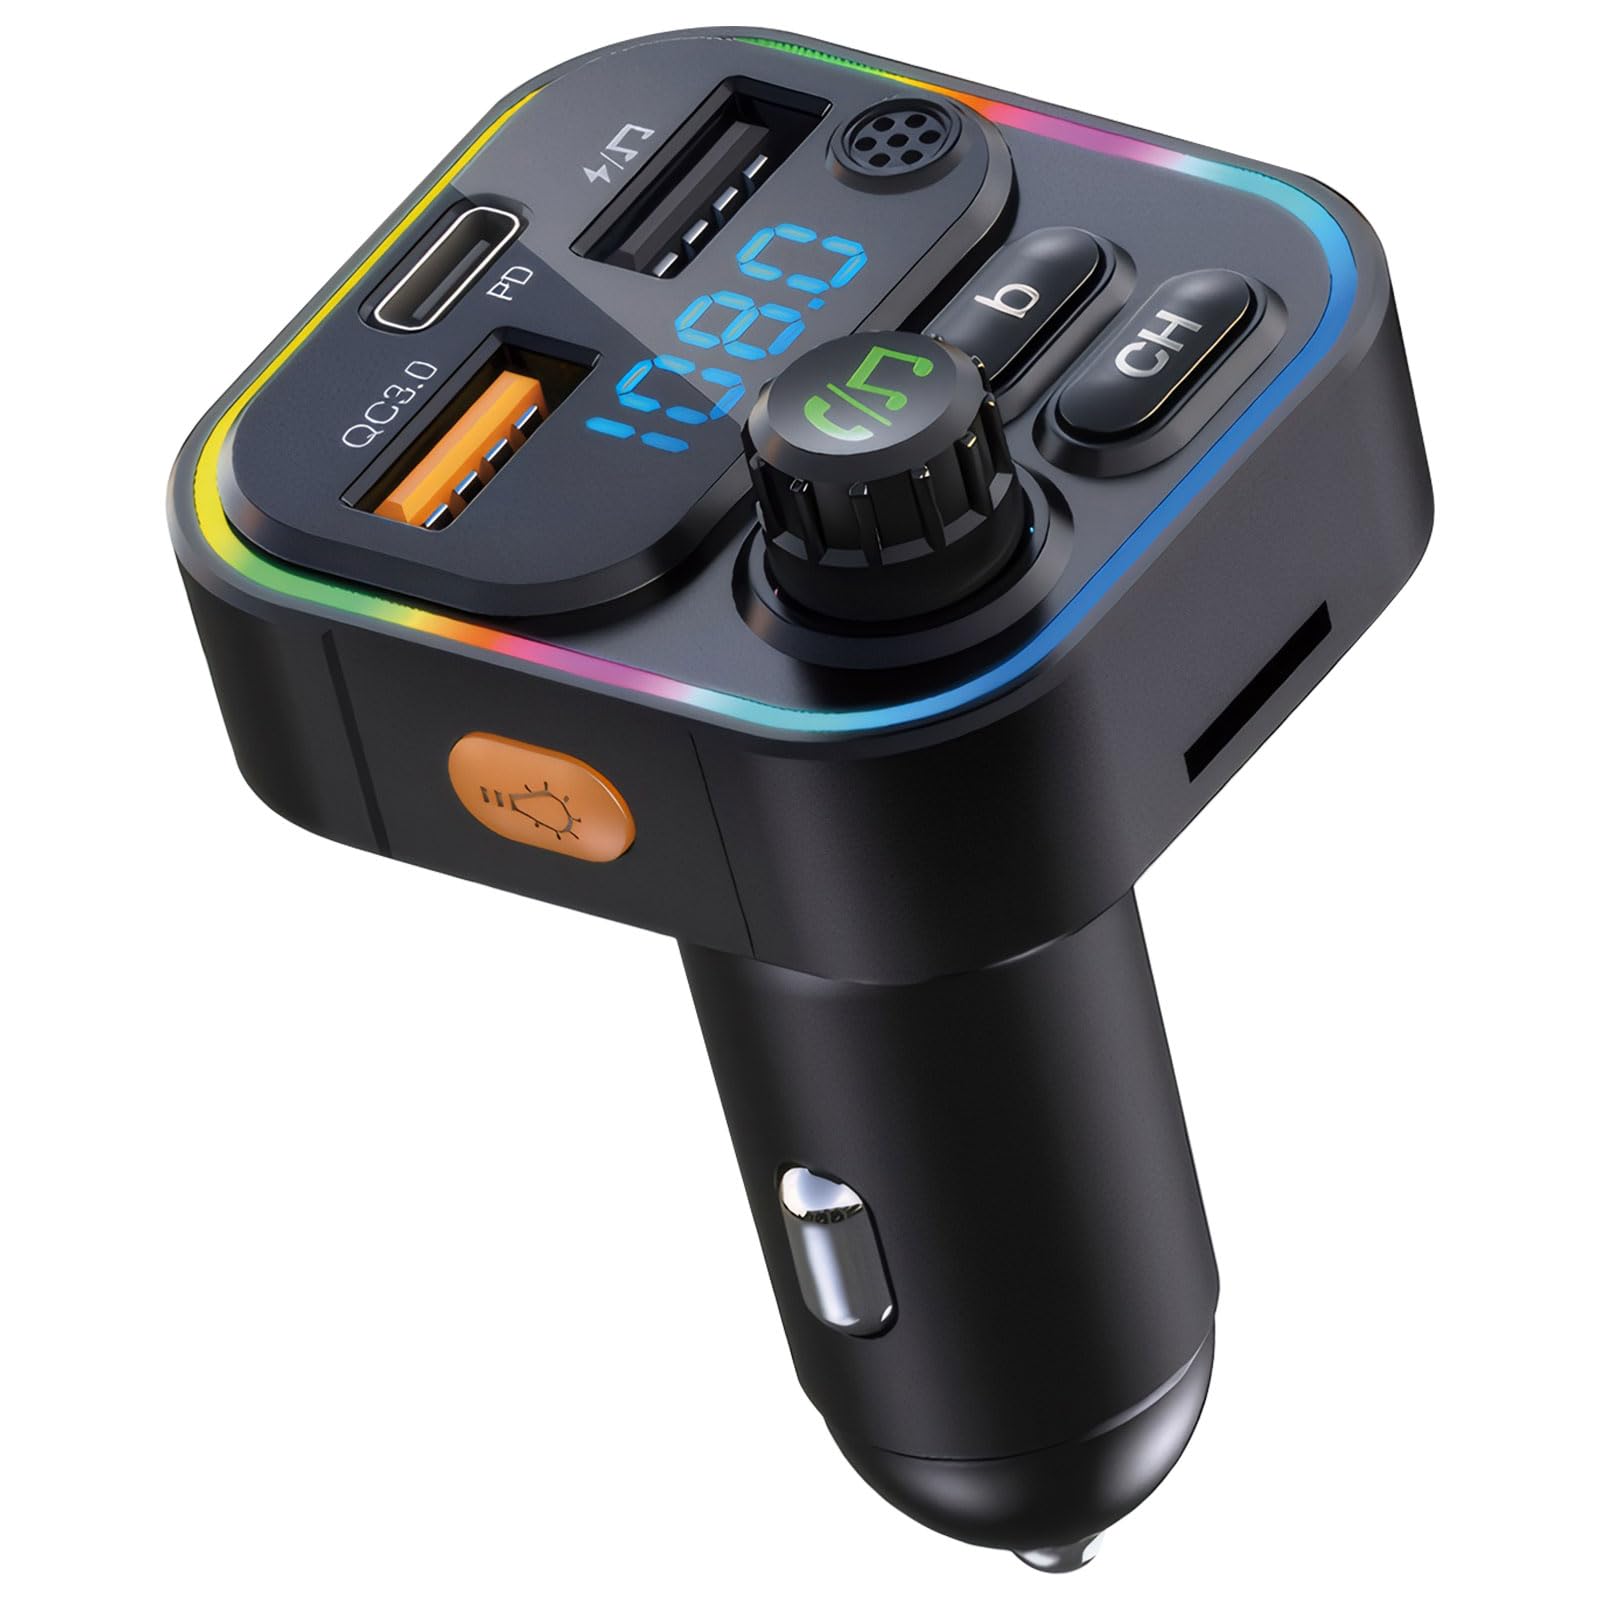 Ninonly FMトランスミッター Bluetooth5.0 車載充電器 FM transmitter 音楽再生 ーチャージャー ハンズフリー通話 電圧測定 microSDカード USBメモリ対応 12-24V車に適応 取り付け不要 7色変換ライト デジタル表示